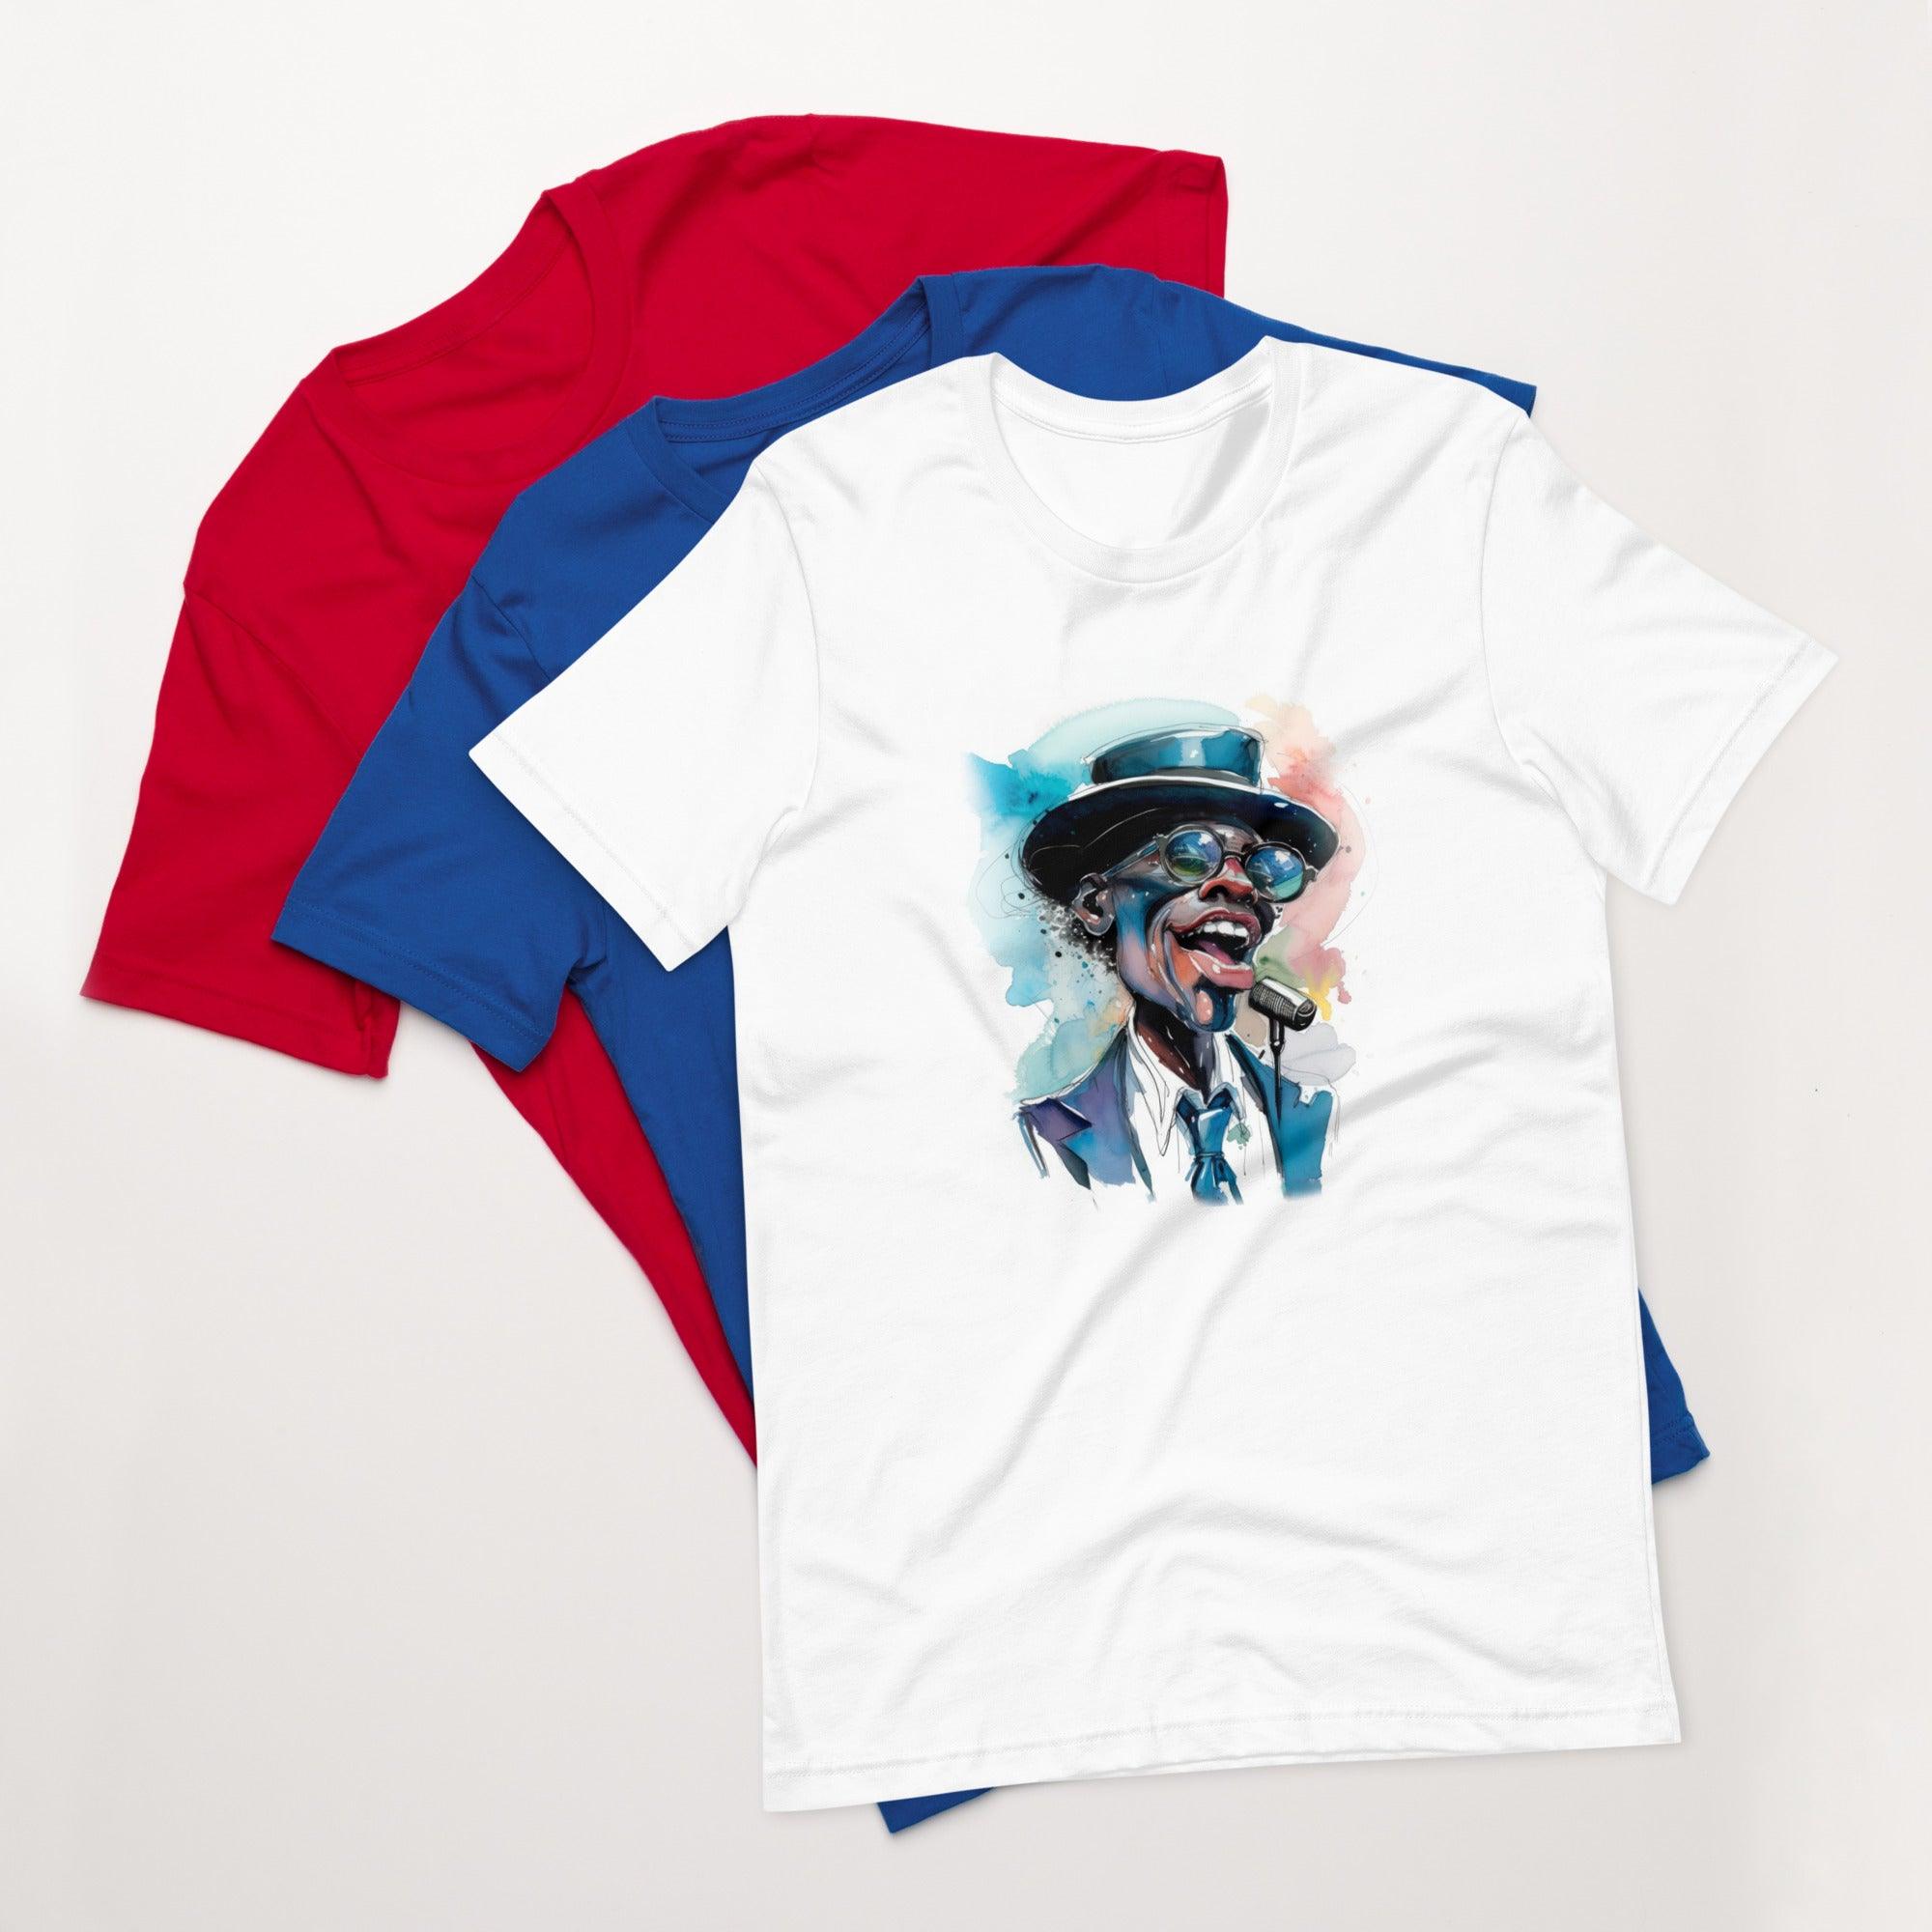 Artistic Amusement: Unisex Playful Portrait Tee - Beyond T-shirts